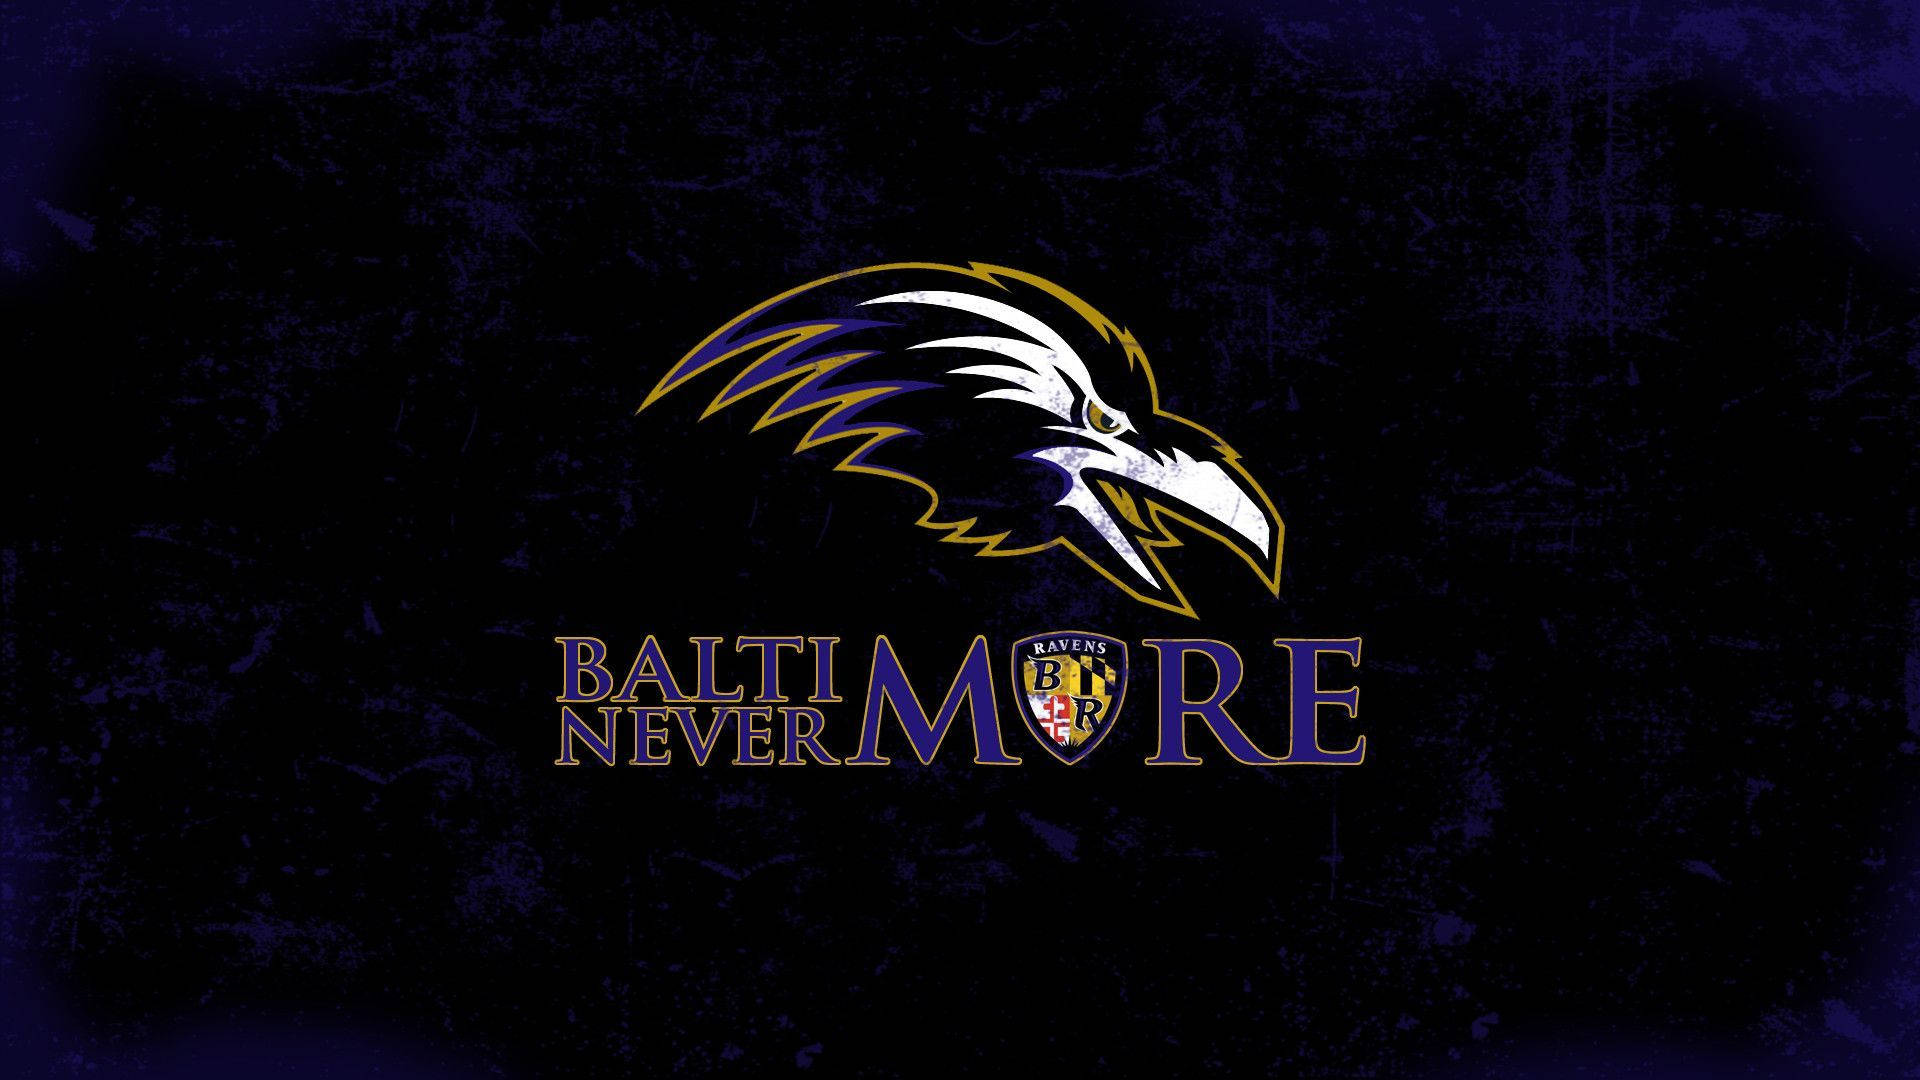 Download Baltimore Ravens Nevermore Poster Wallpaper 